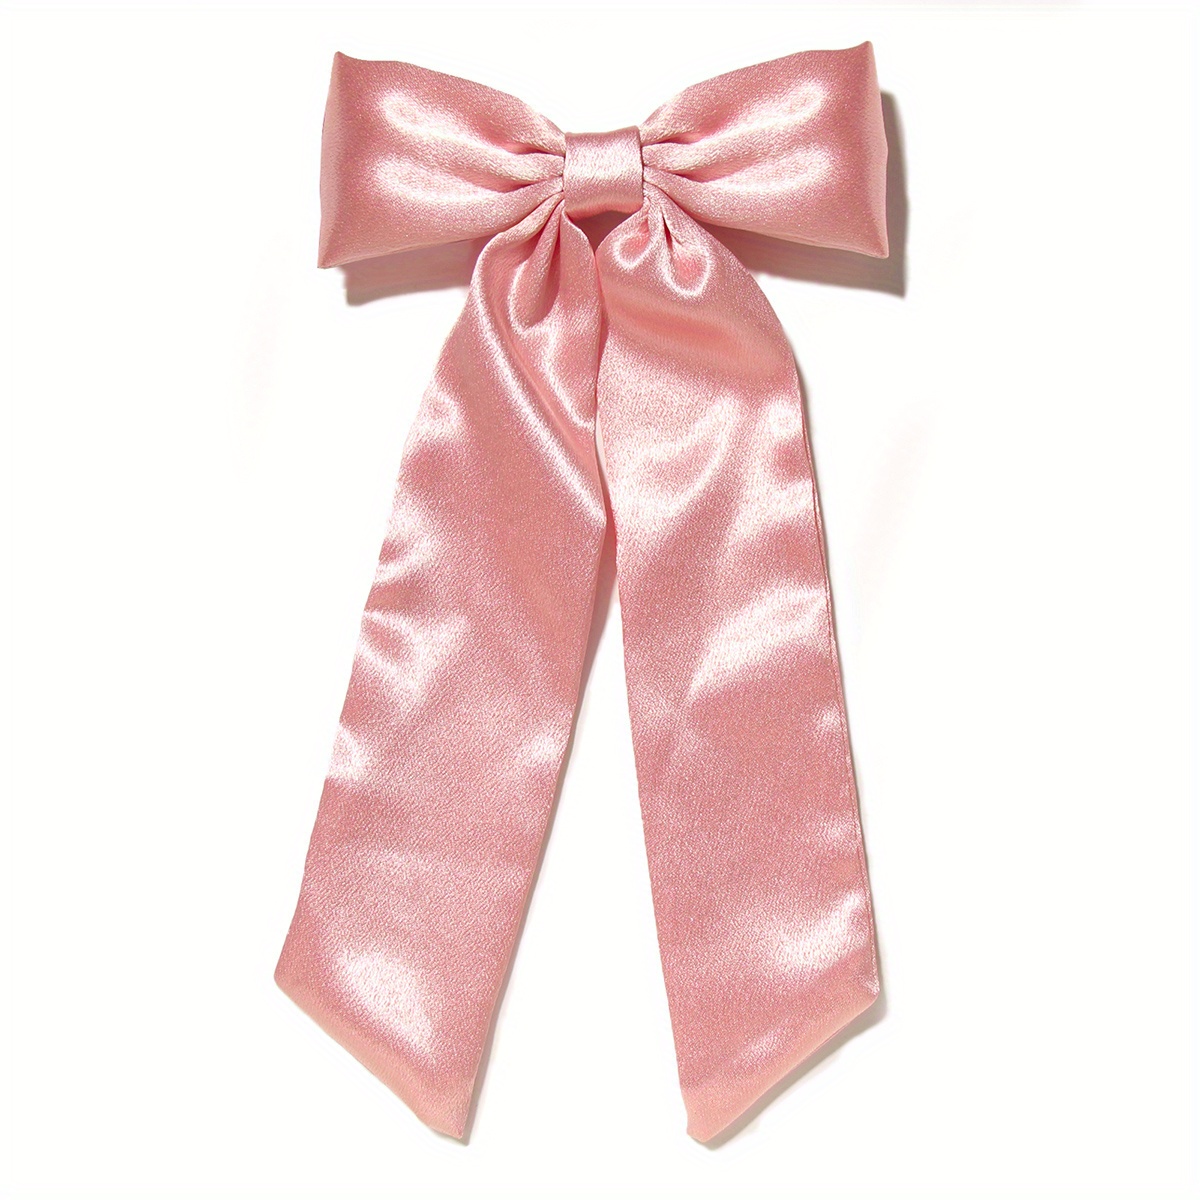 1pc Light Pink Silk Ribbon Bow Hair Clip For Girls, Elegant Solid